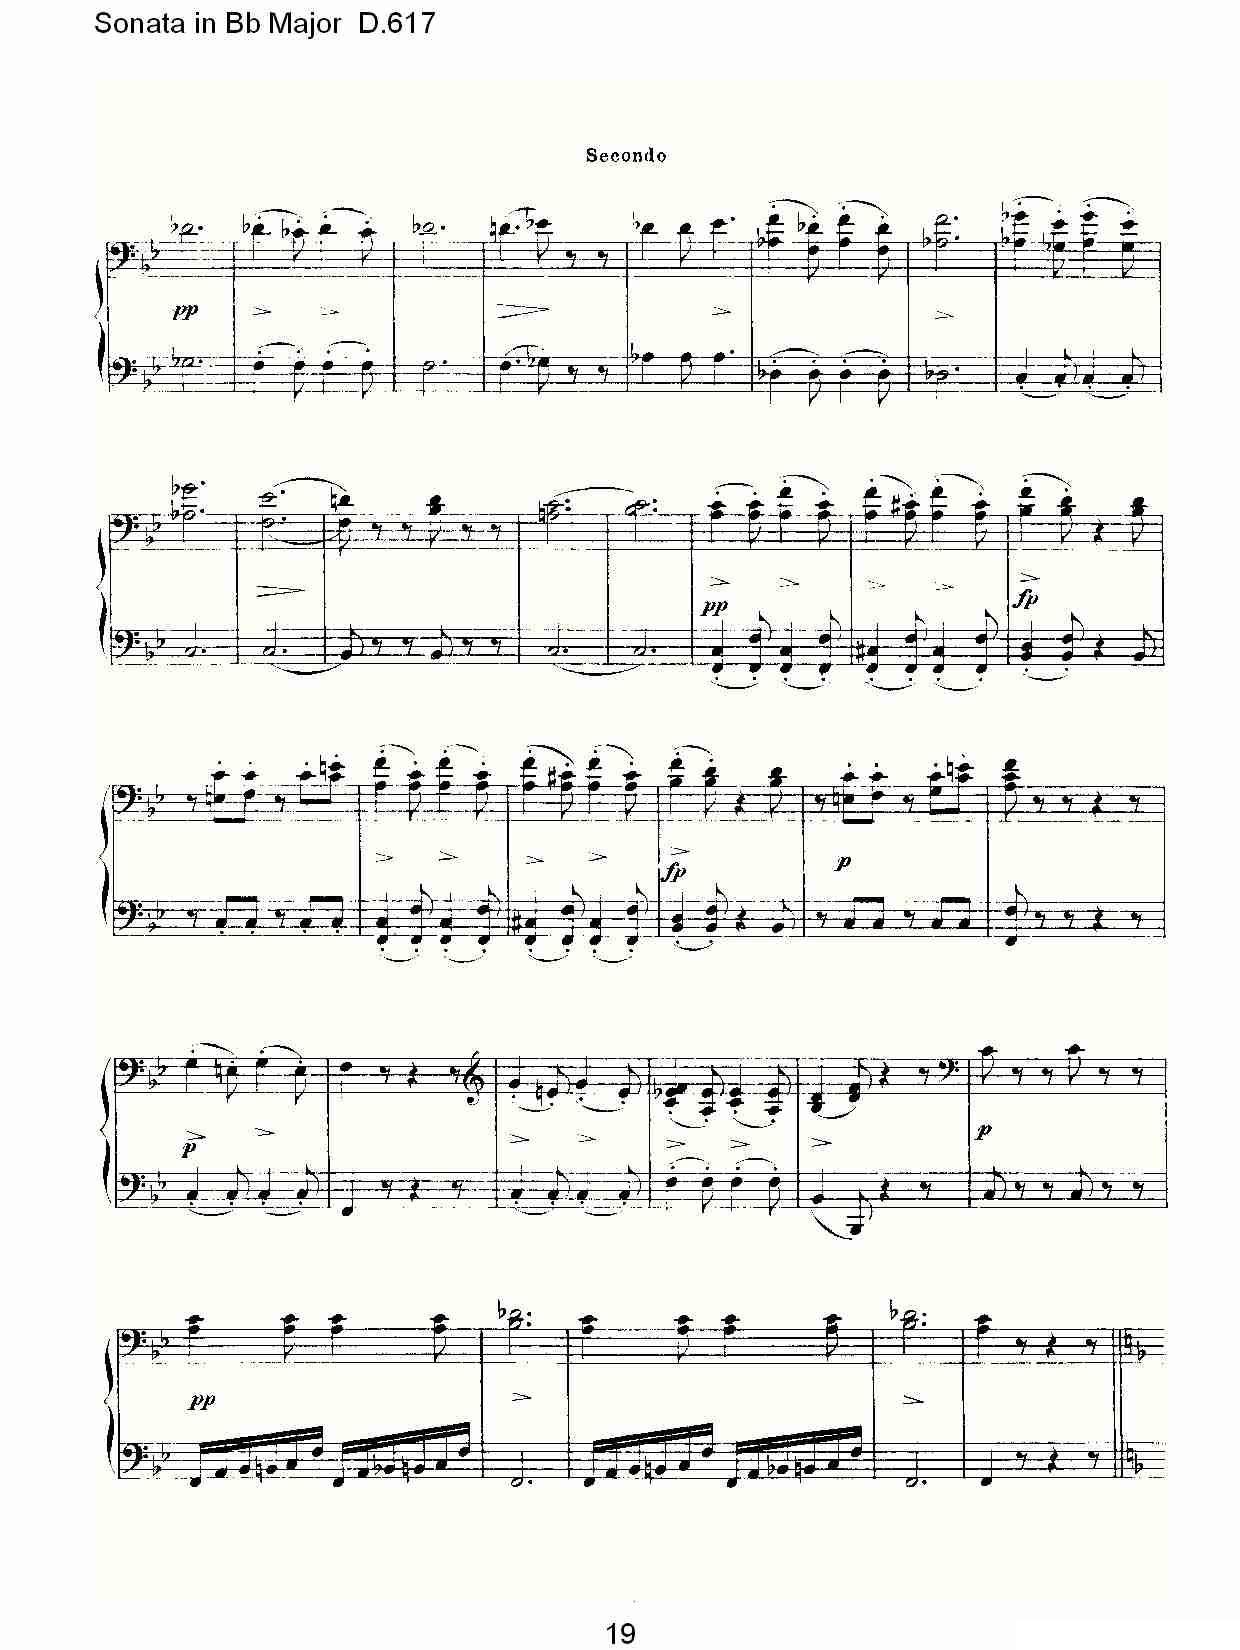 Sonata in Bb Major D.617（Bb大调奏鸣曲 D.617）钢琴曲谱（图19）